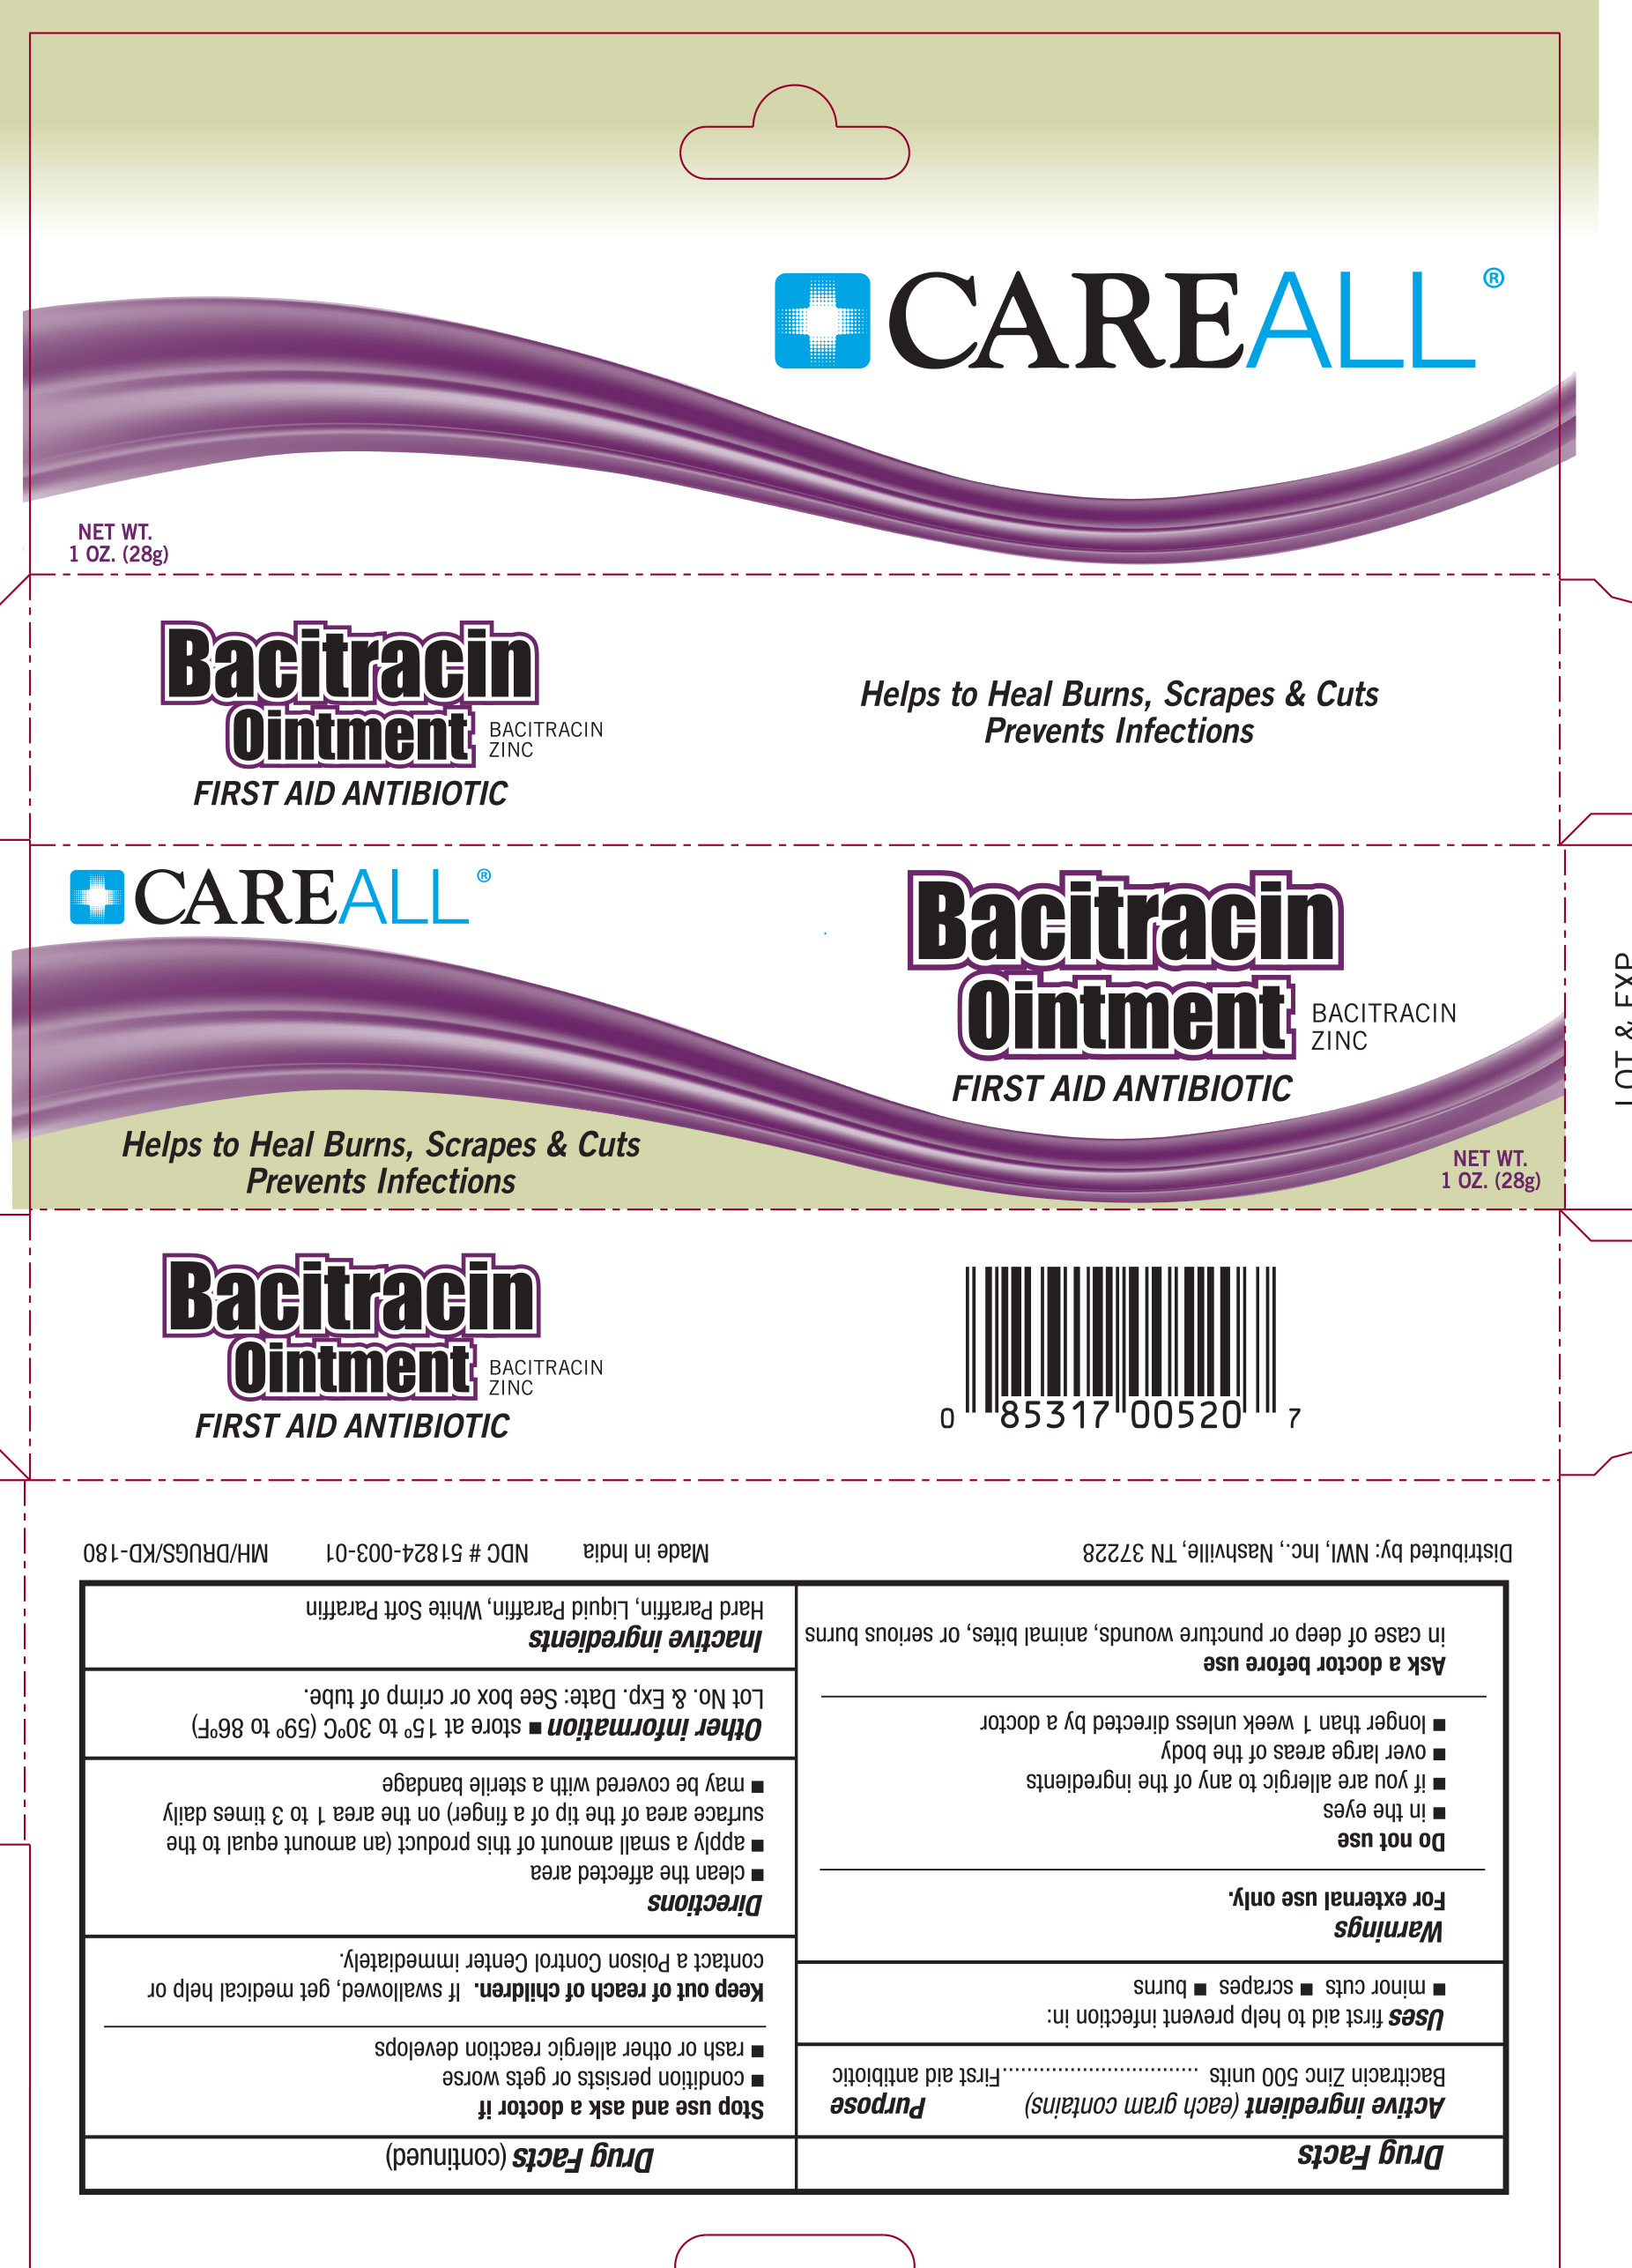 Bacitracin Label.jpg